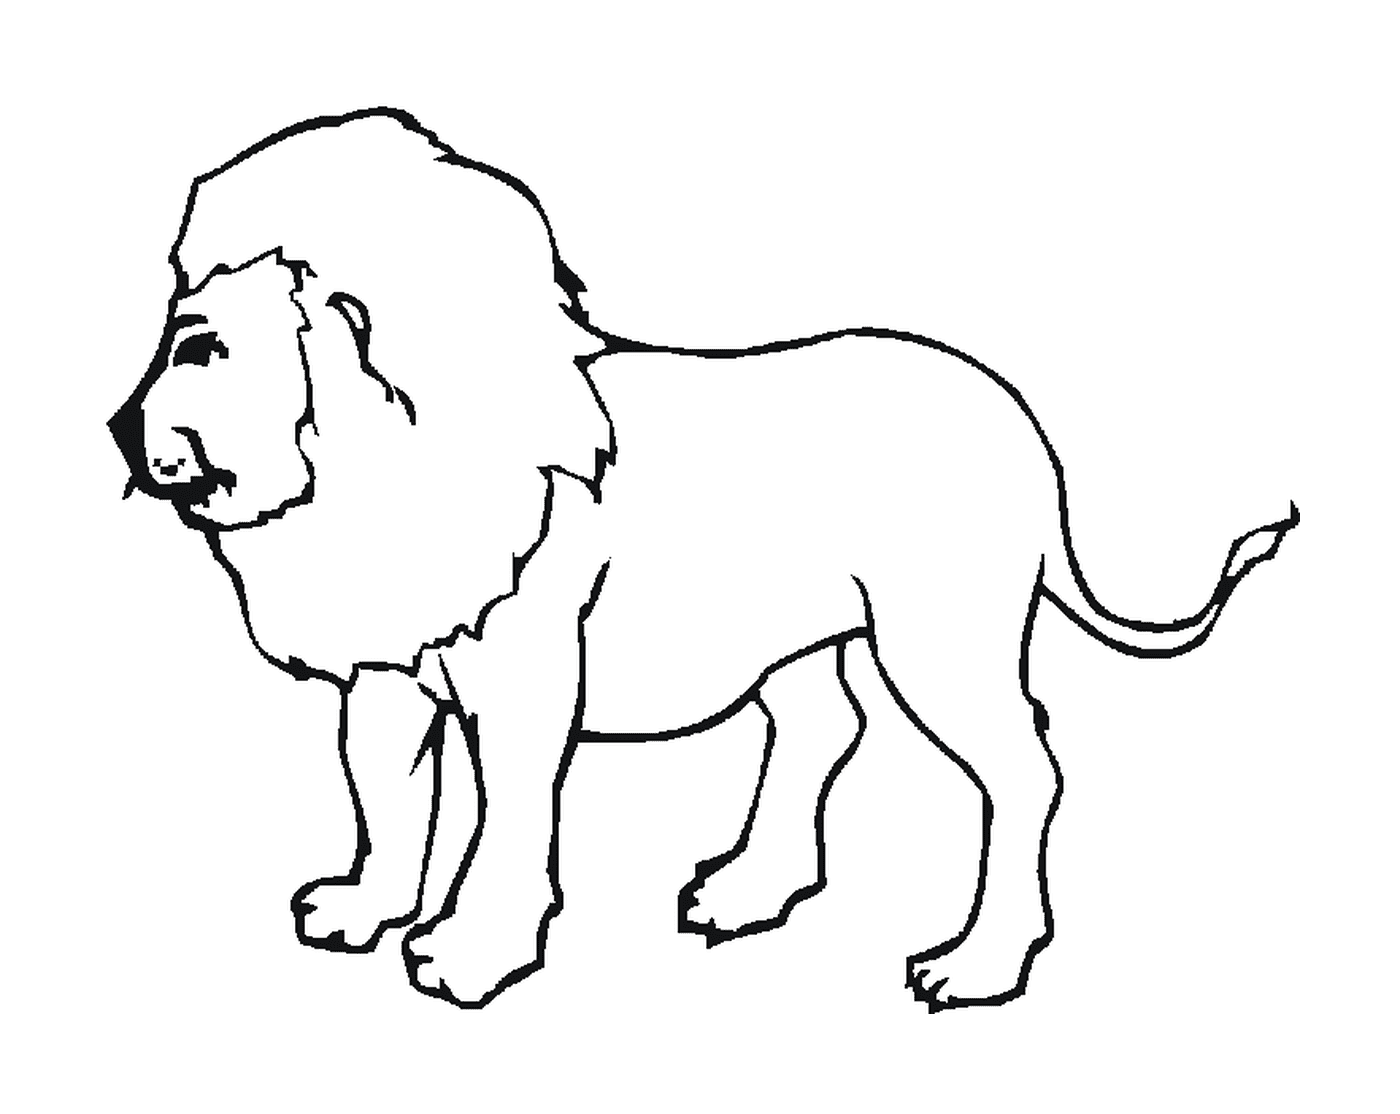  Leão de Bárbaro, majestoso 